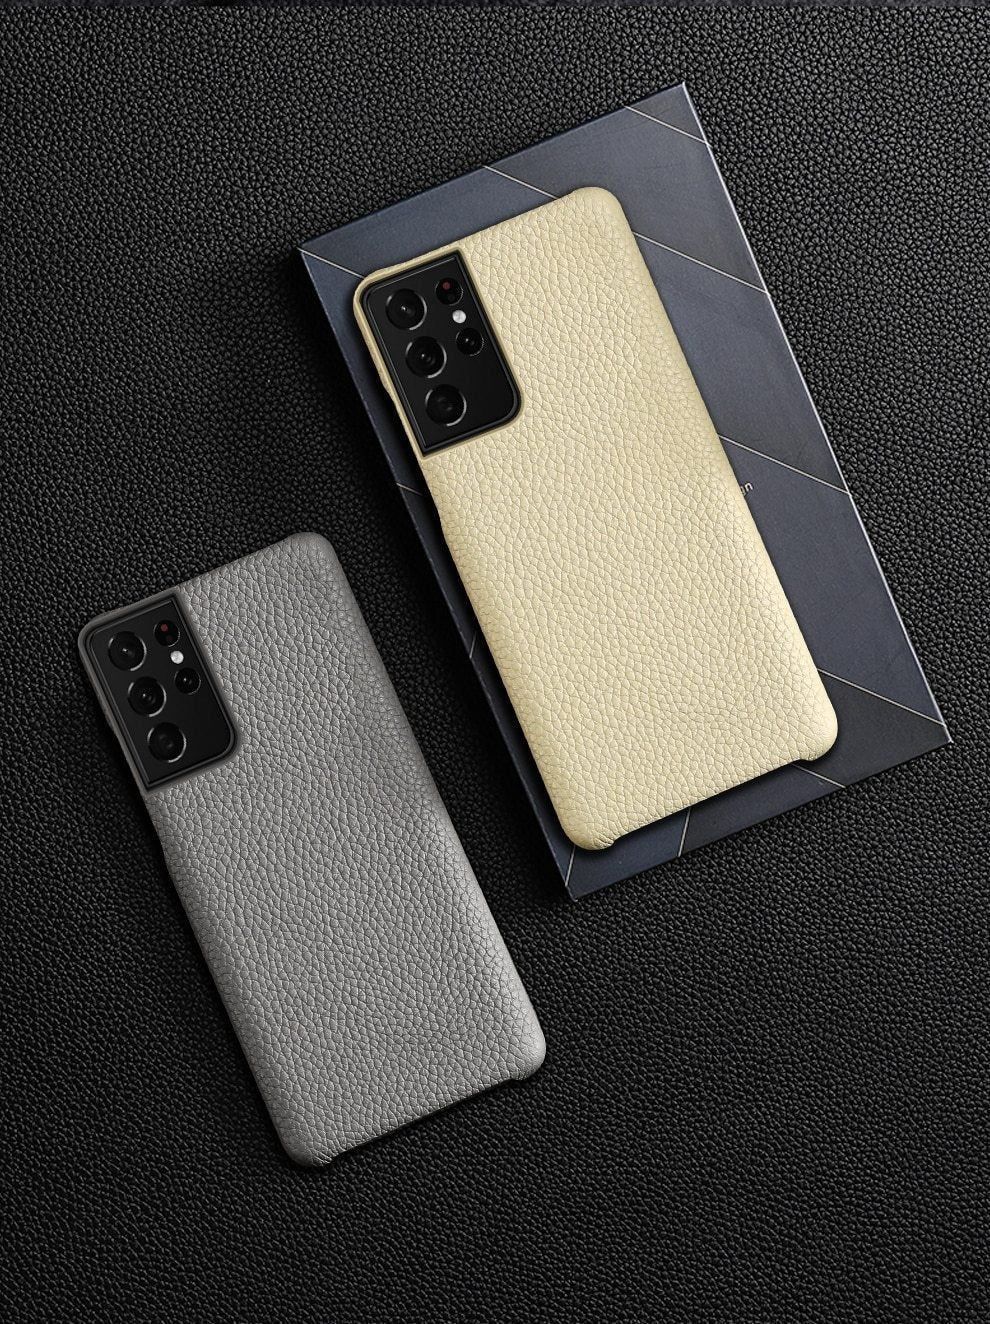 Fashion besiktas BJK Phone Case for Samsung A51 A30s A52 A71 A12 for Huawei  Honor 10i